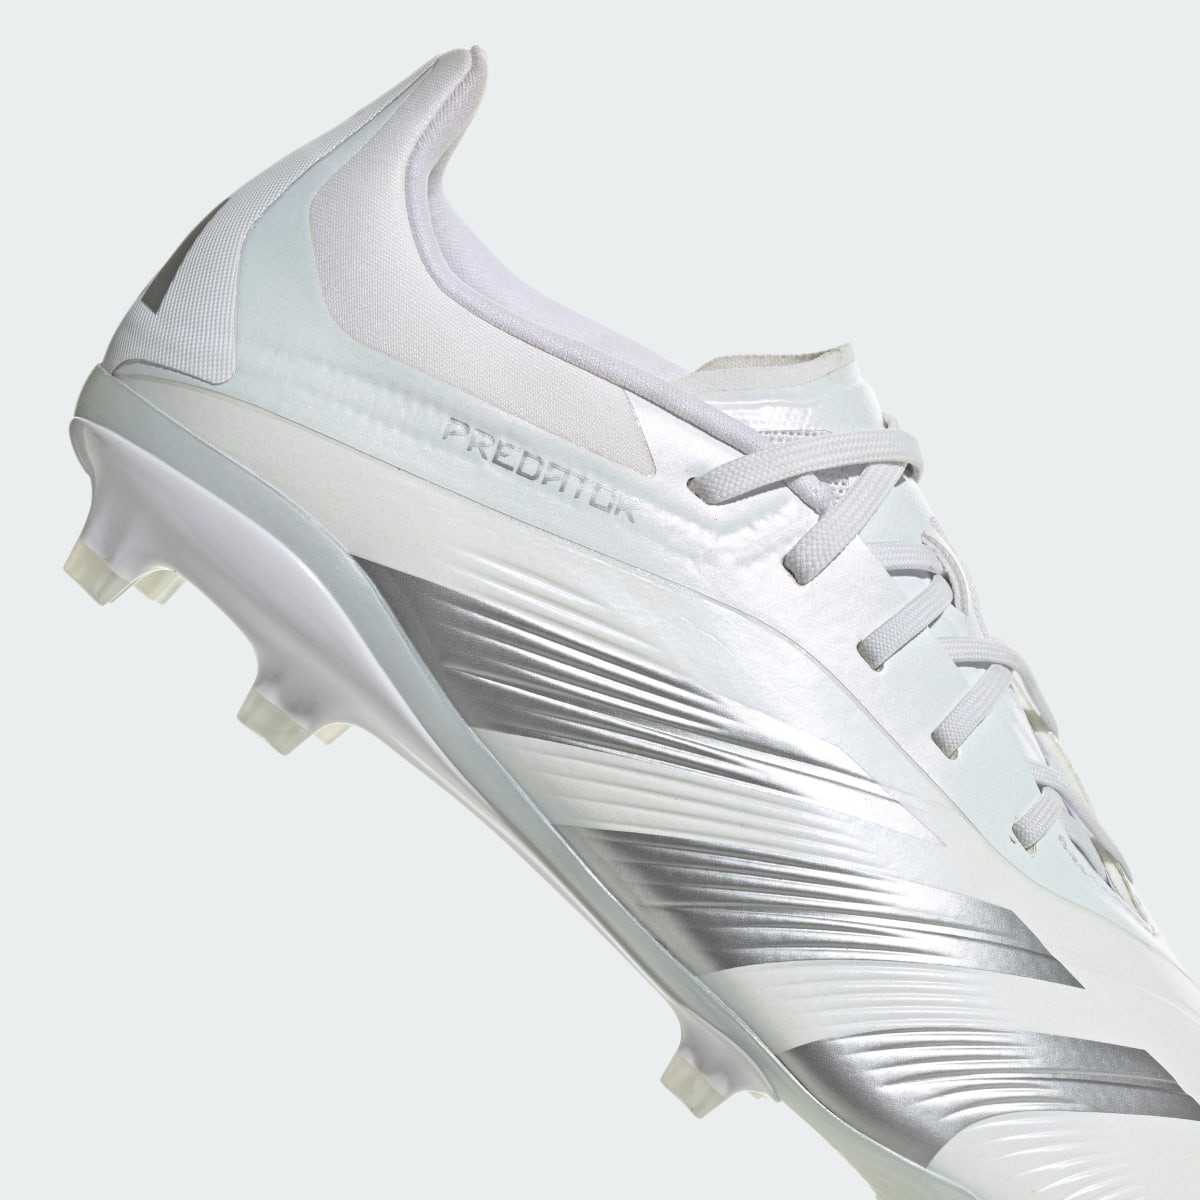 Adidas Predator Elite Firm Ground Football Boots. 9